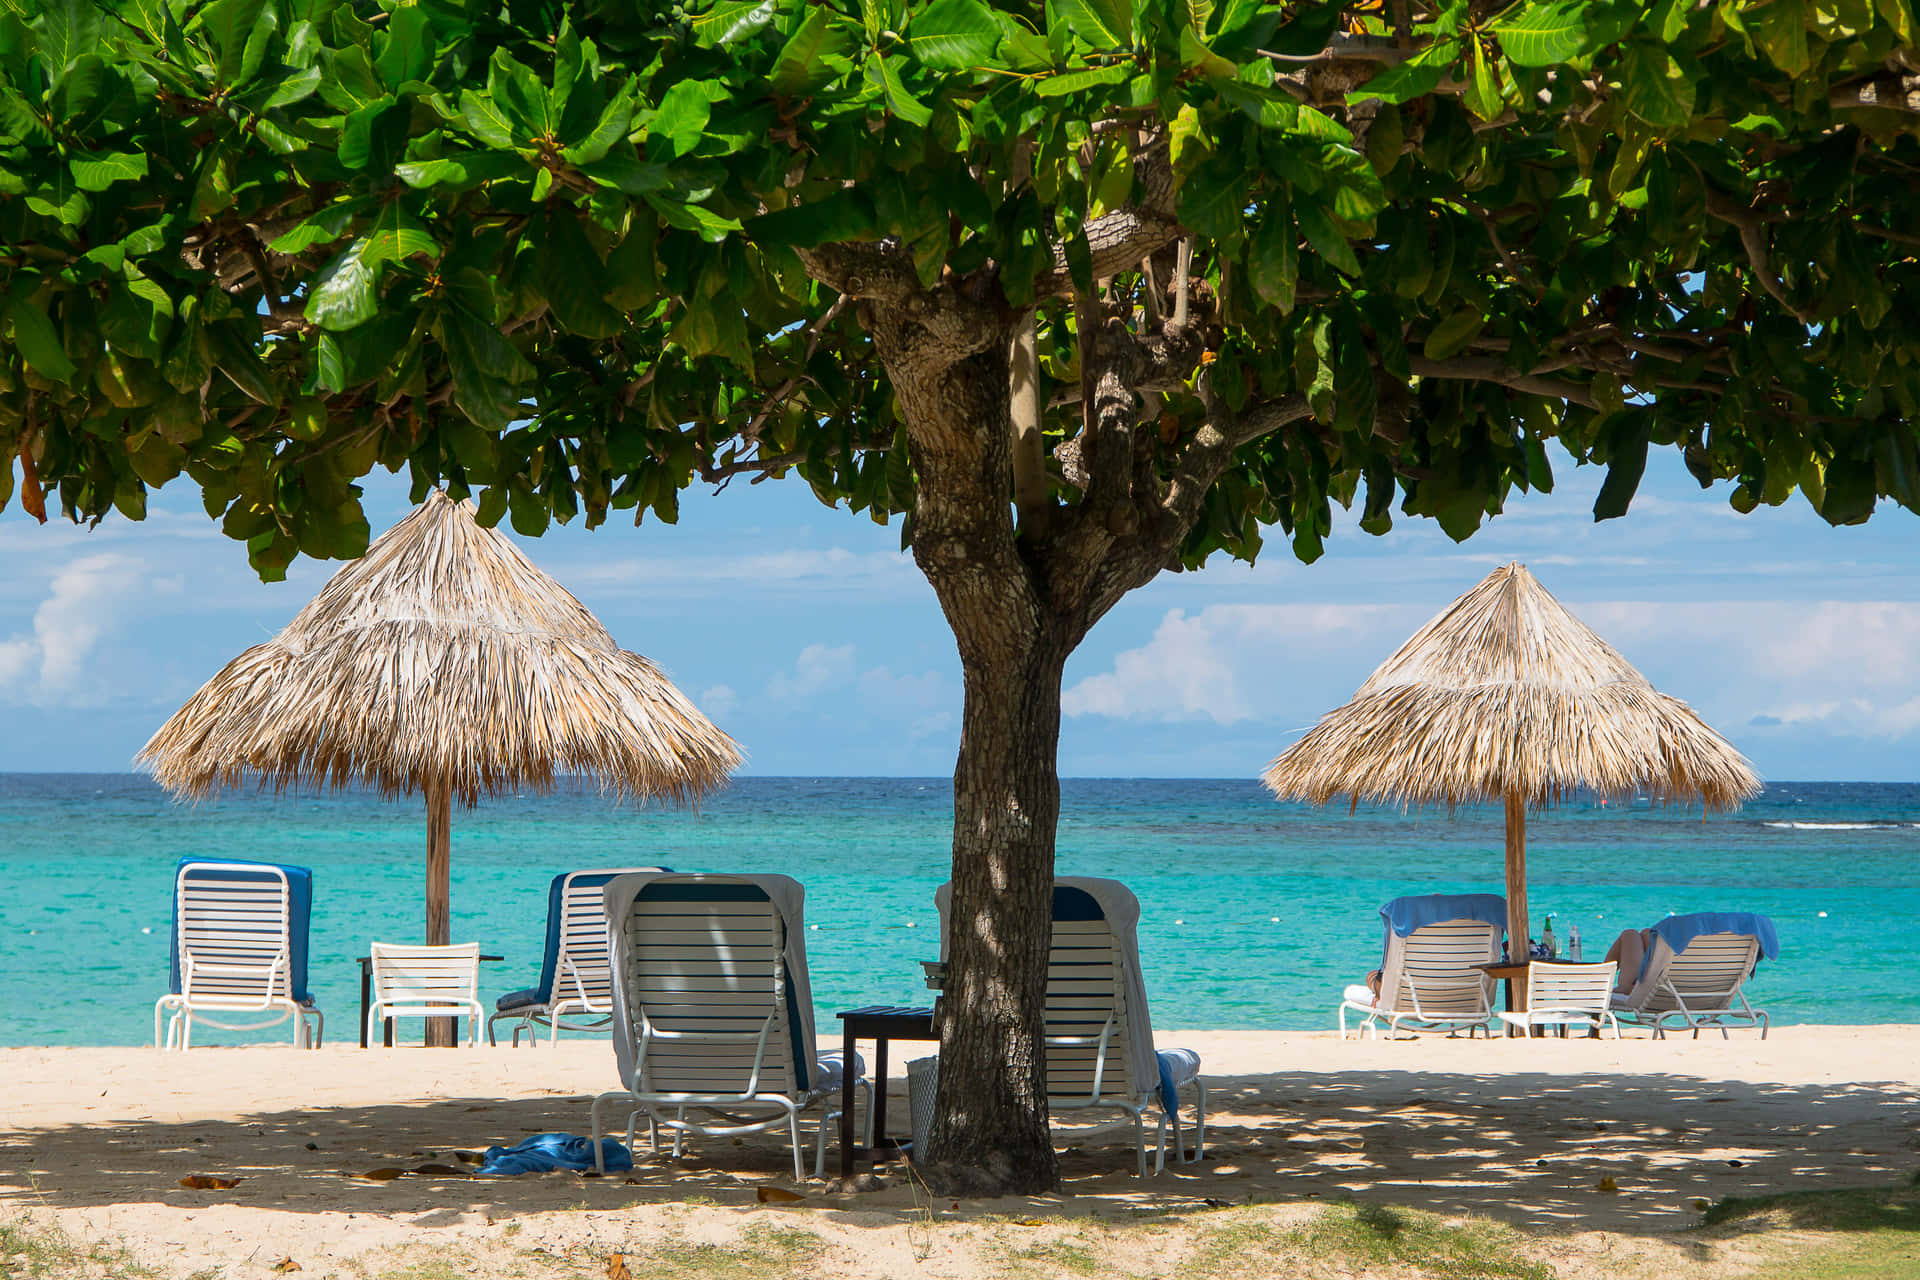 Wandering the idyllic shores of Jamaica